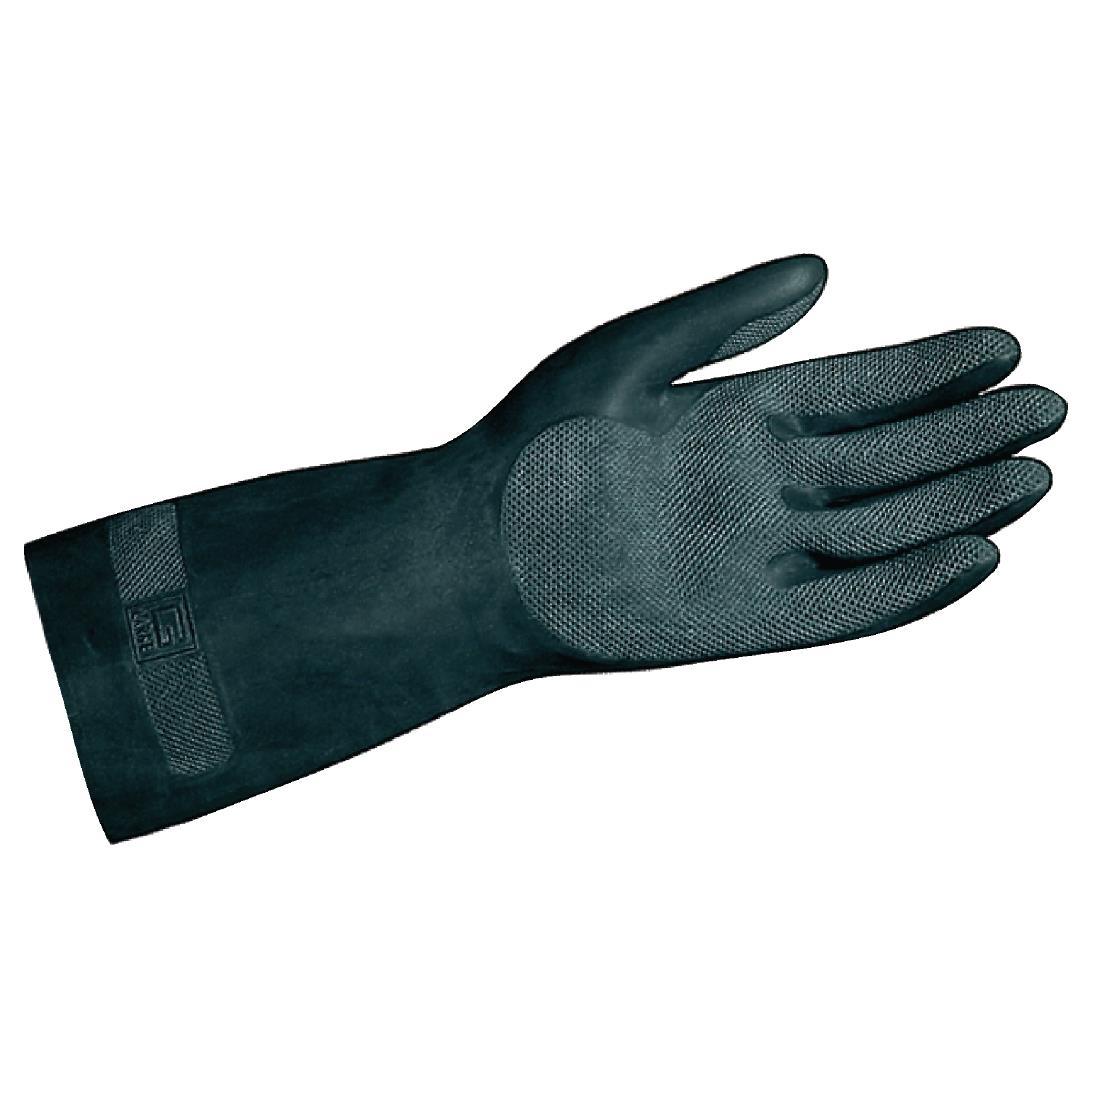 MAPA Cleaning and Maintenance Glove M - F954-M  - 2